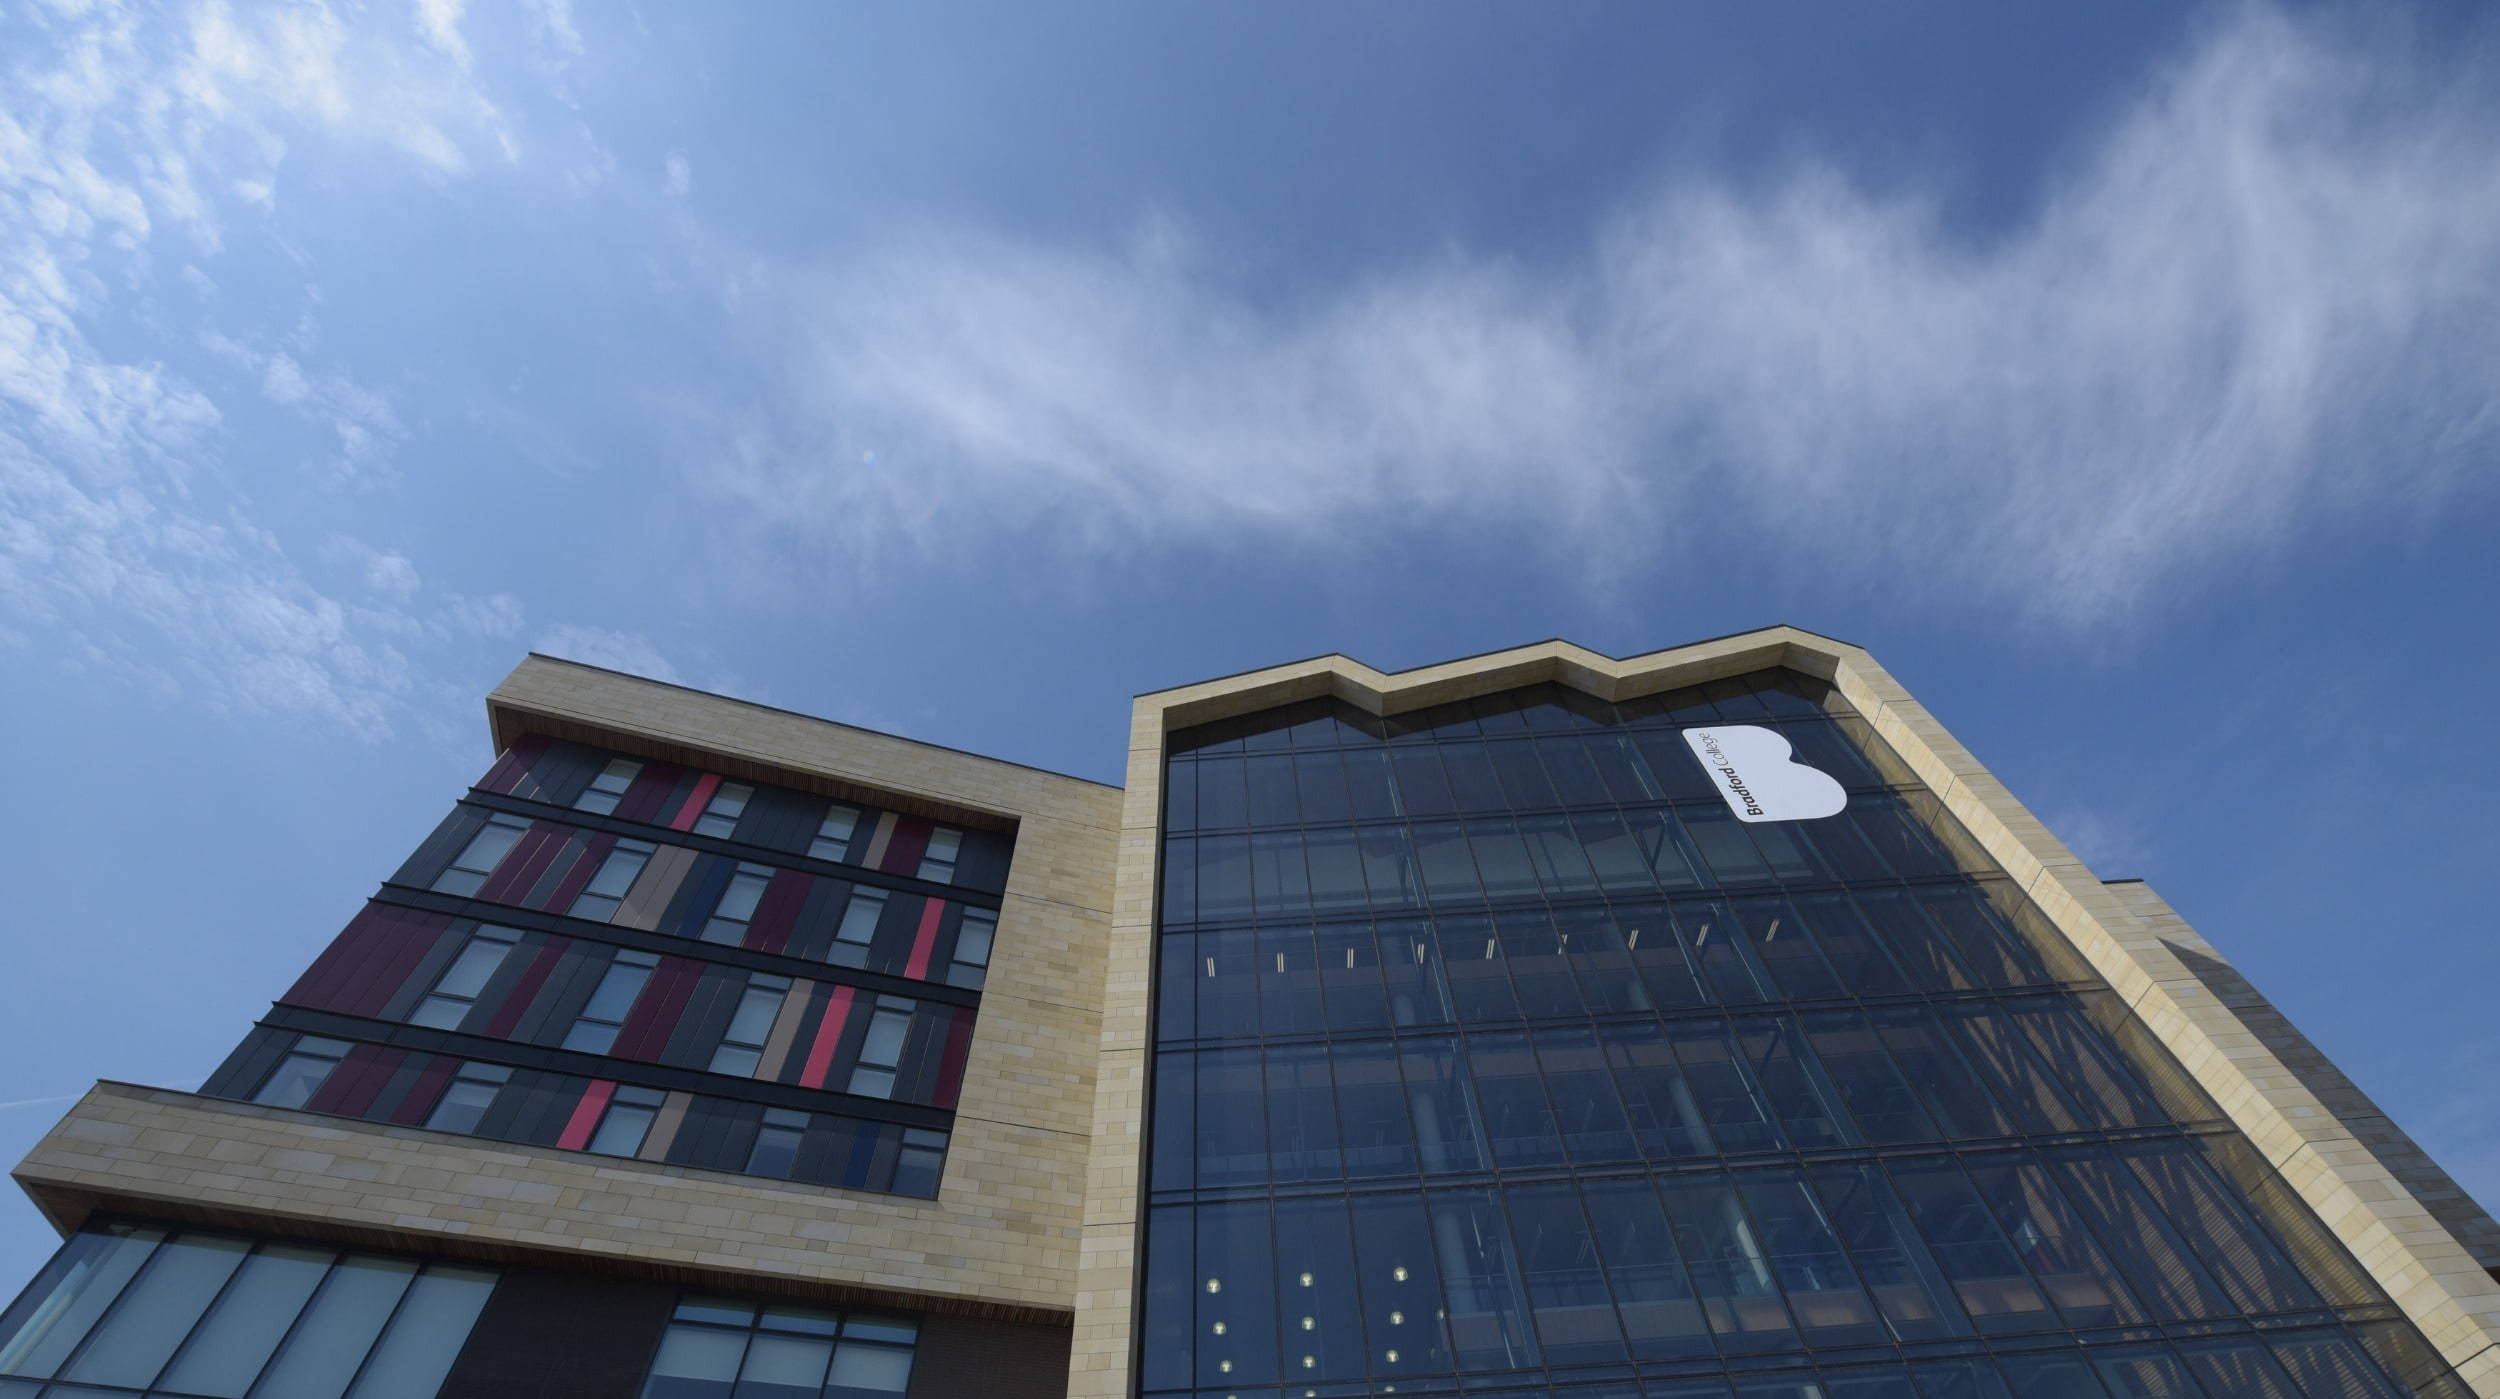 Bradford College David Hockney Building on a summer day